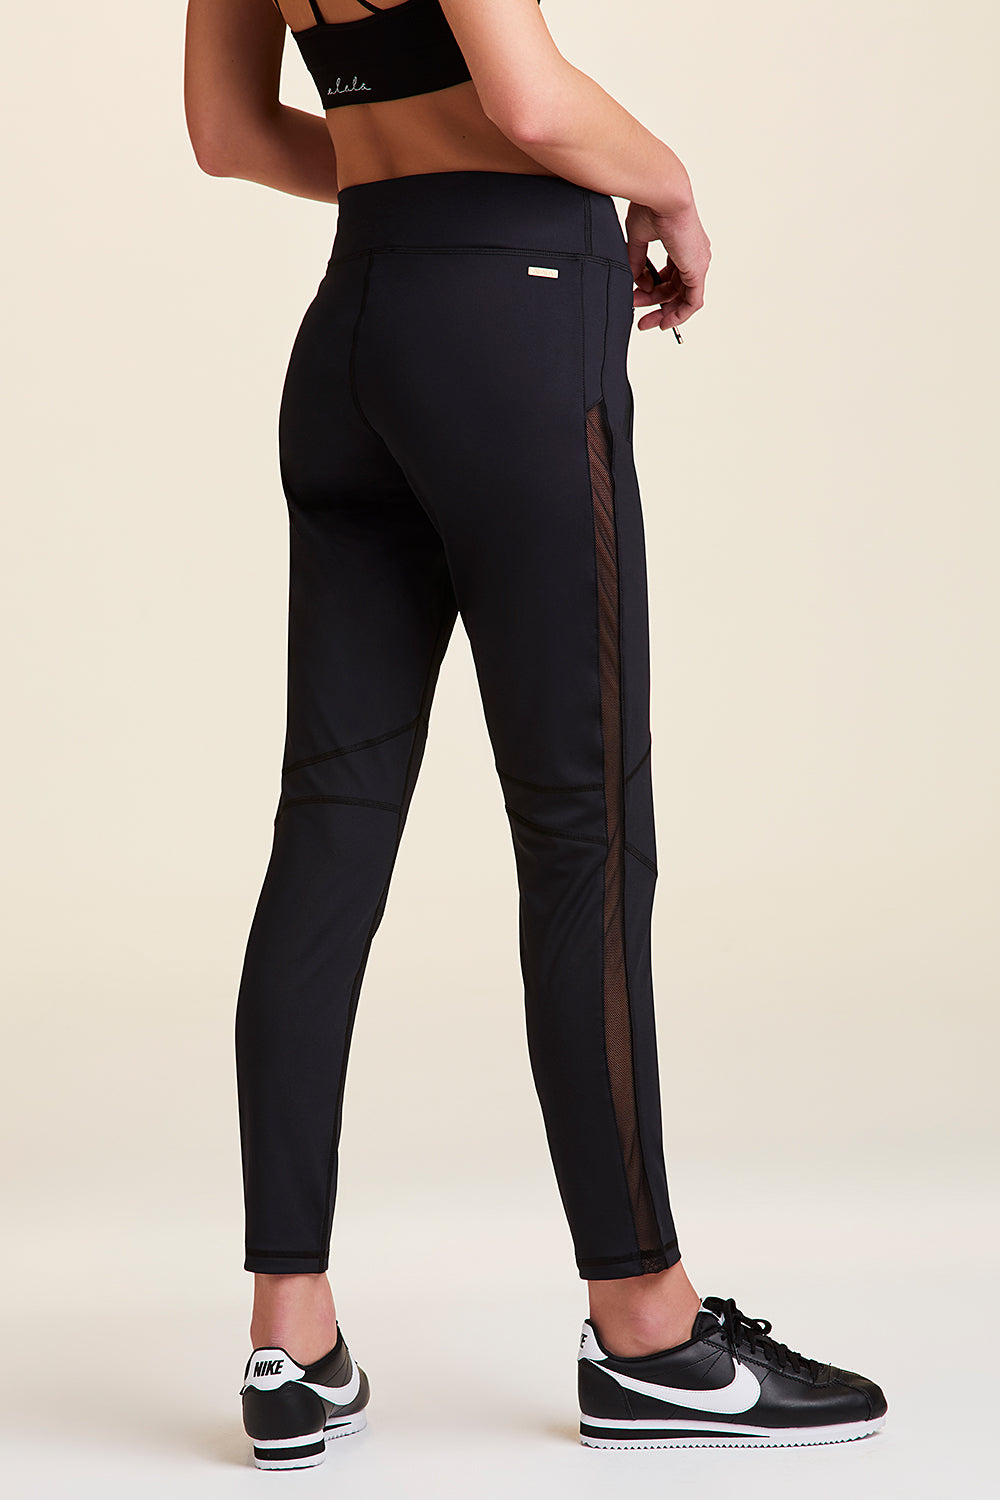 Fast Track Pant - Black Track Pants, Jogging Pants for Women